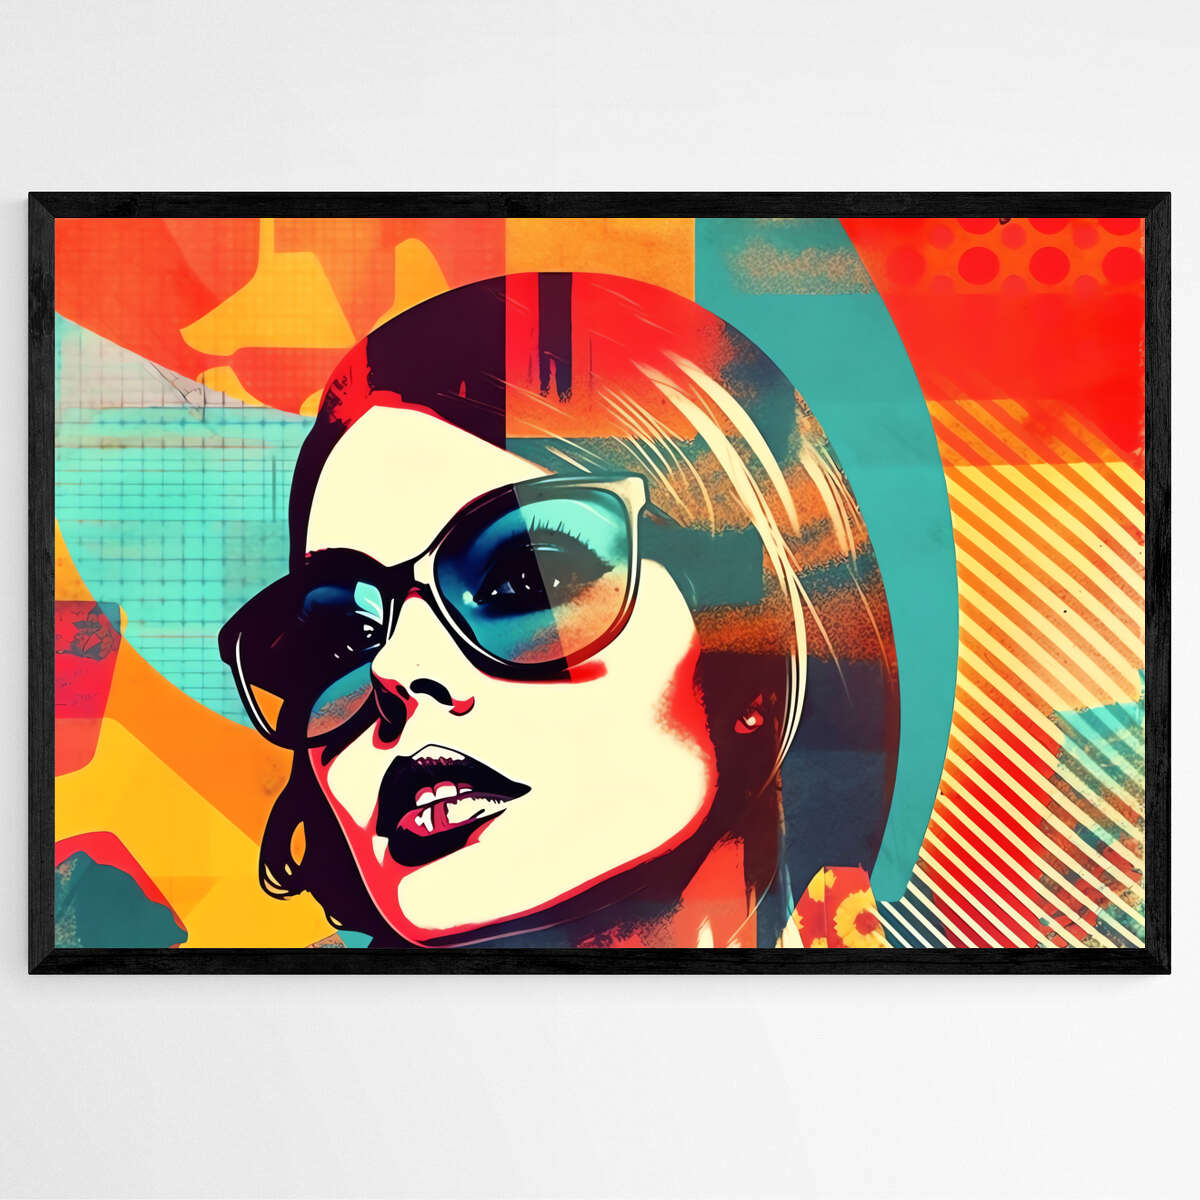 Spectacle Girl Portrait | Pop Art Wall Art Prints - The Canvas Hive